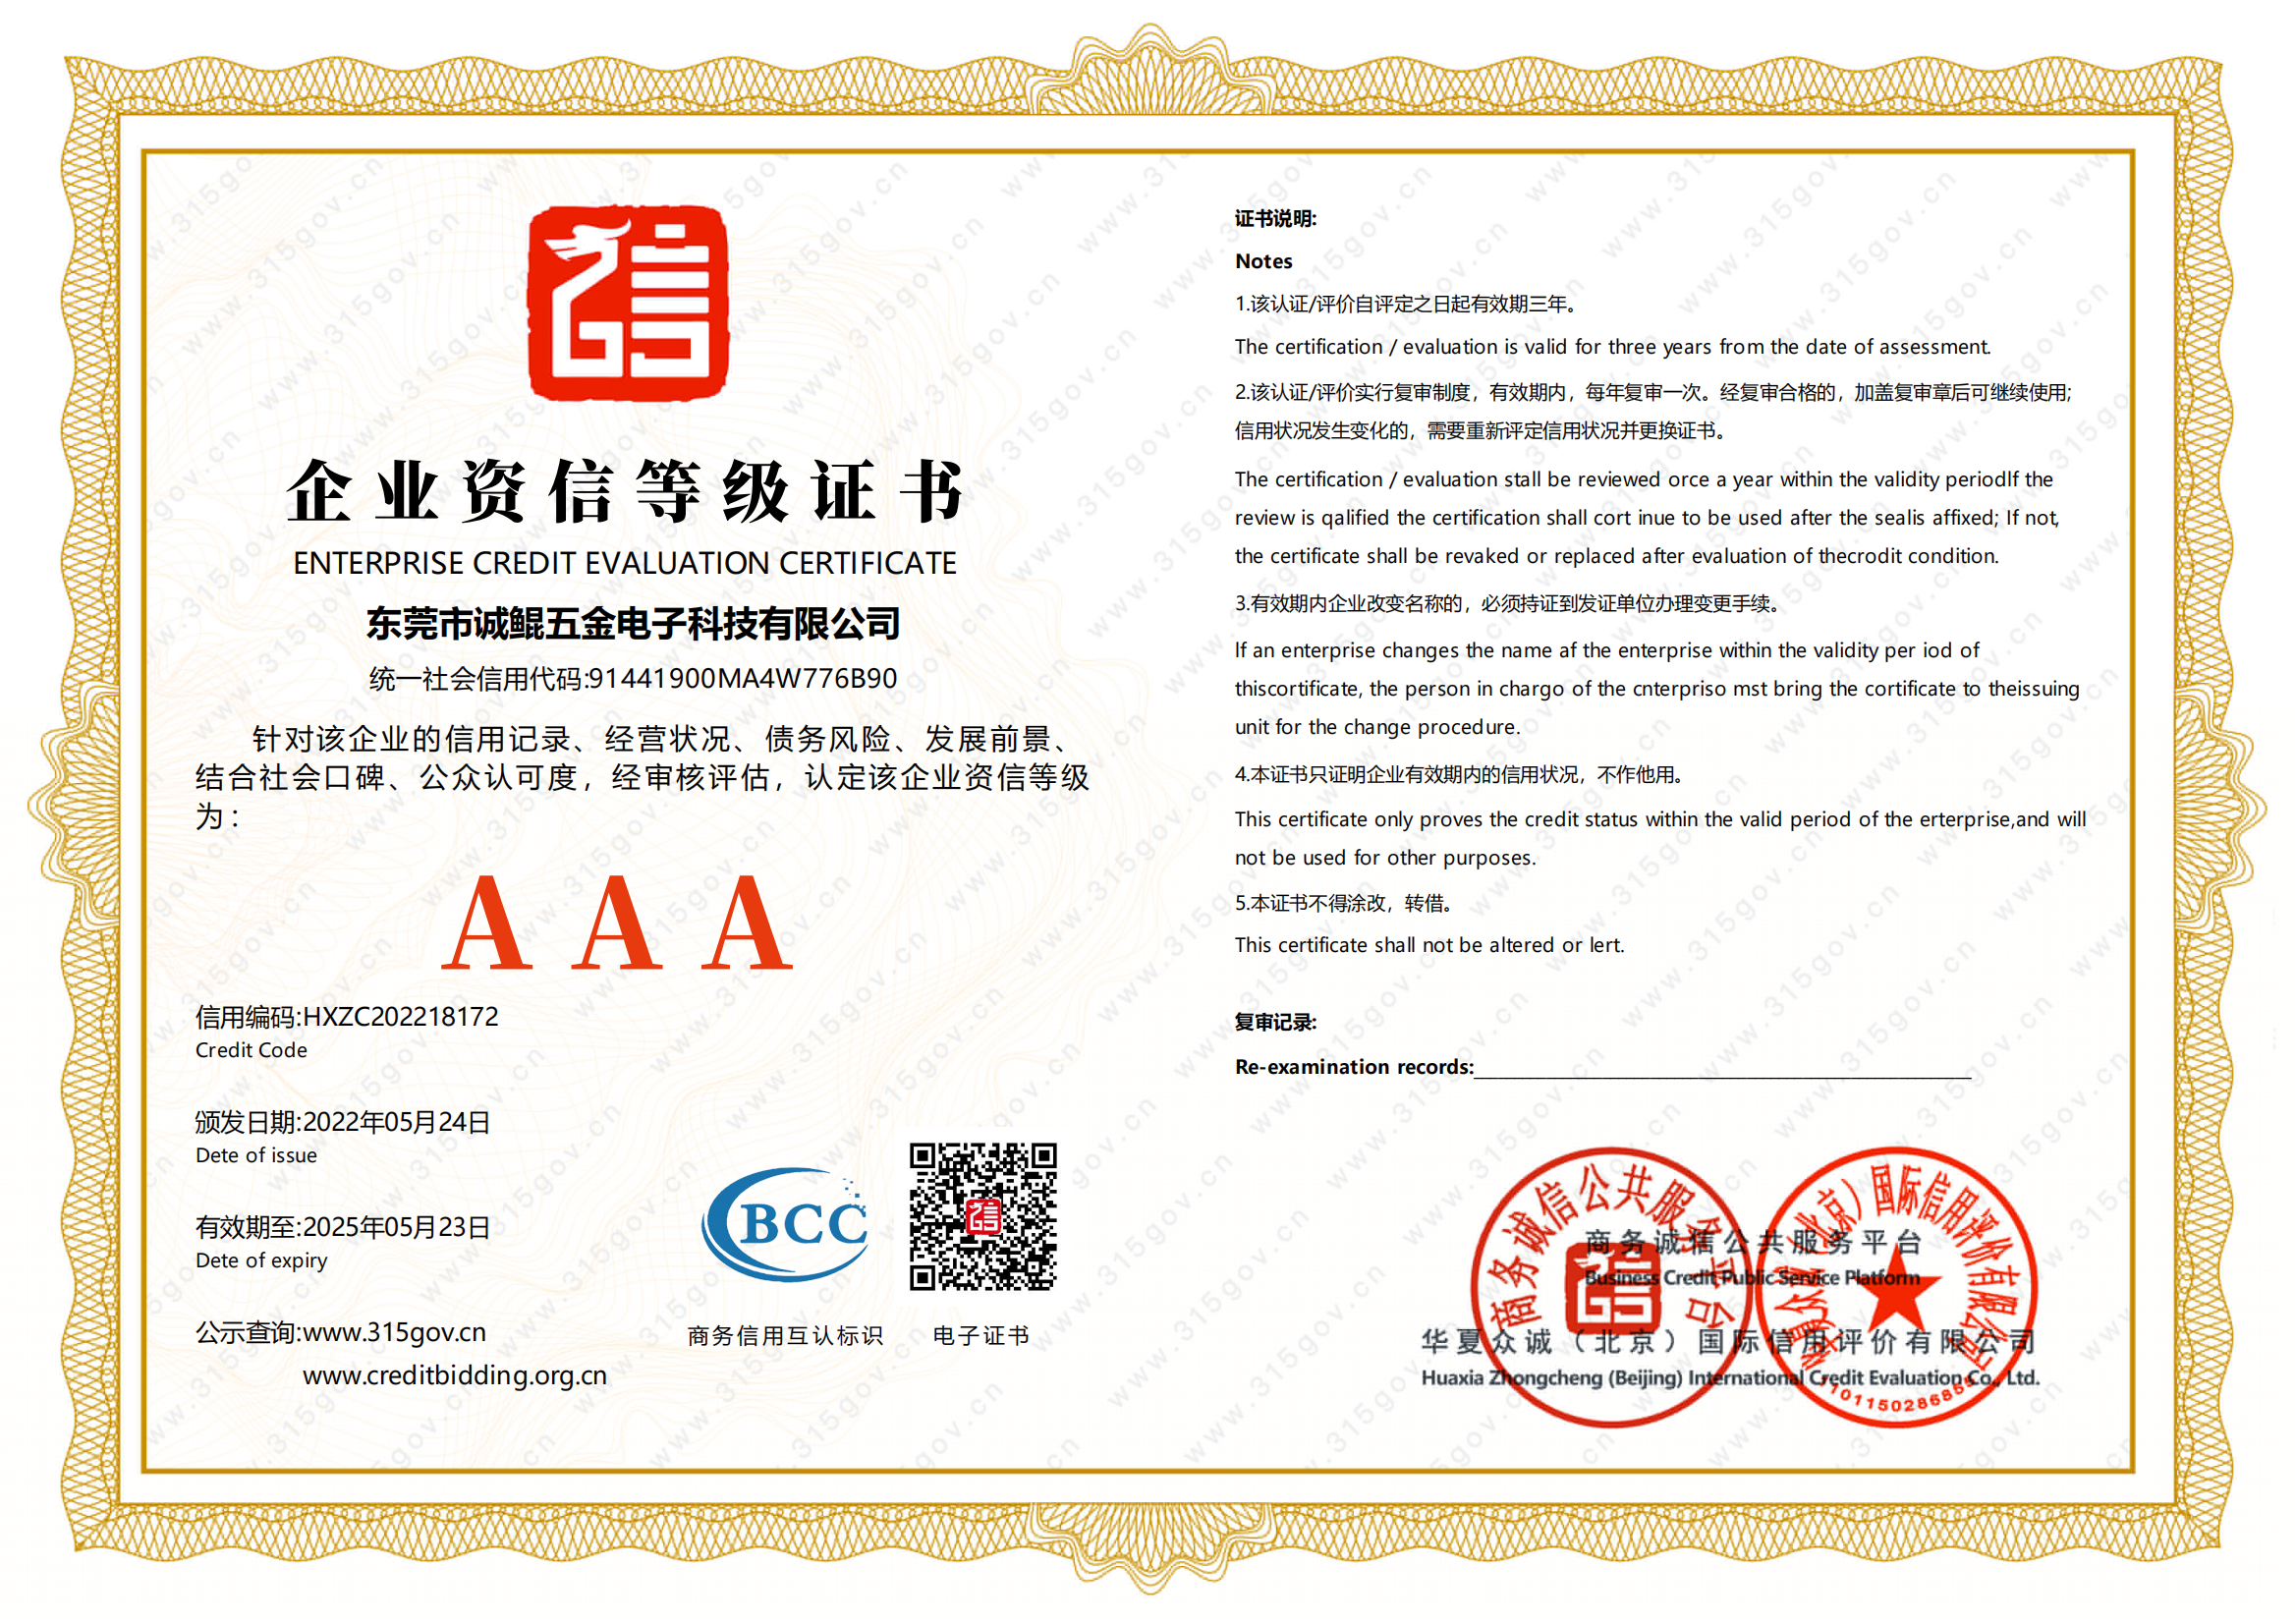 Enterprise credit evaluation certificate